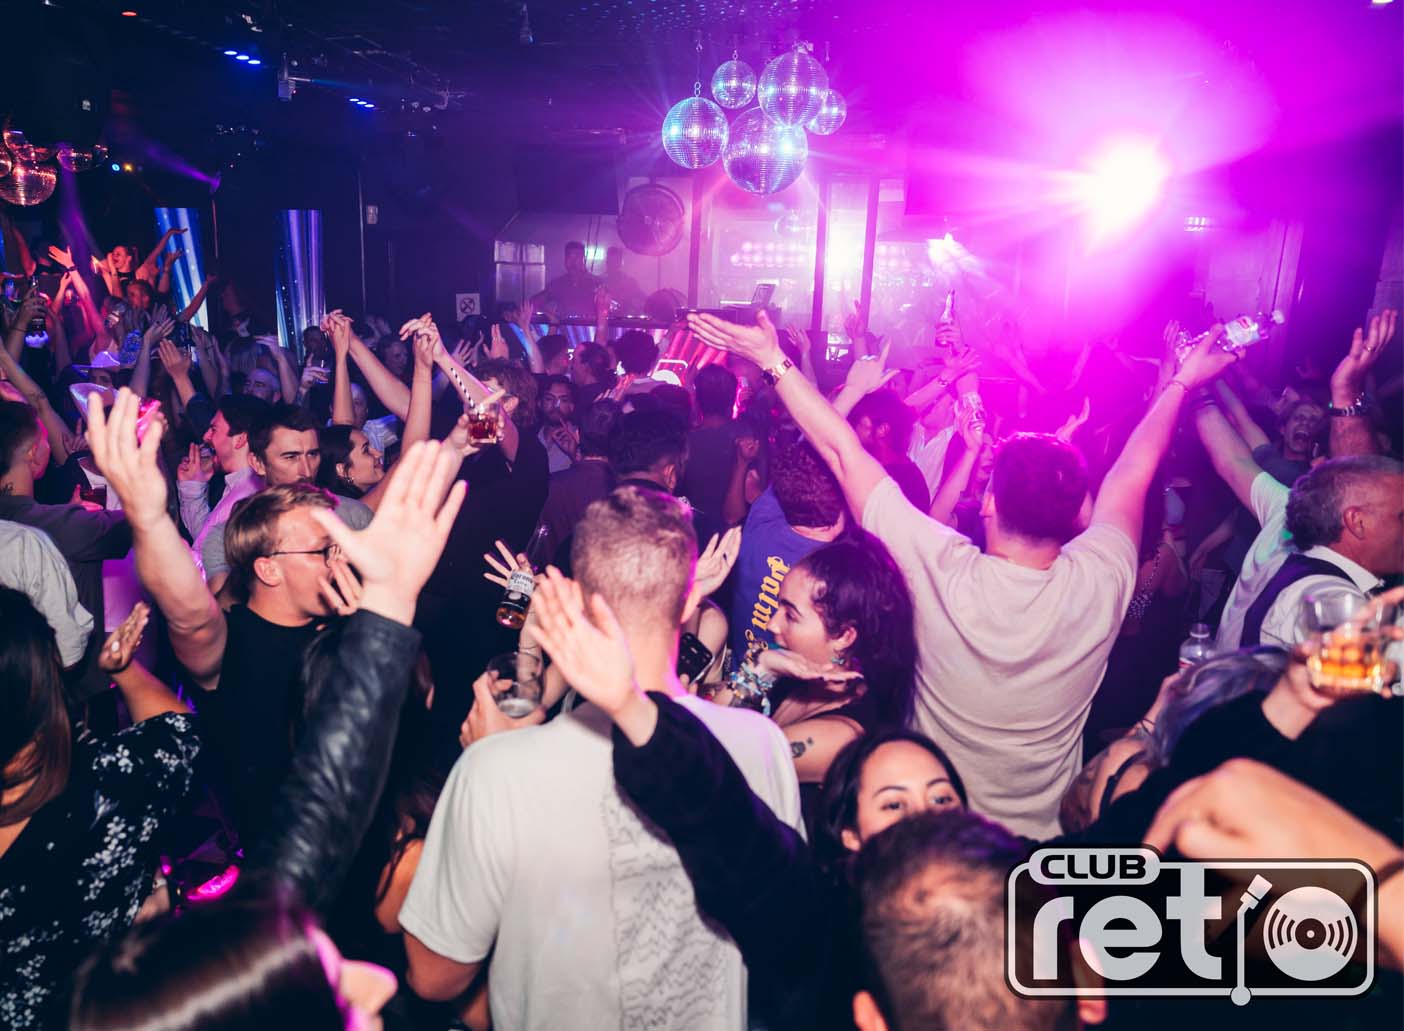 Club Retro Melbourne CBD City bar bars nightclub clubs club music dj late night throwback fun groups top hens (20)